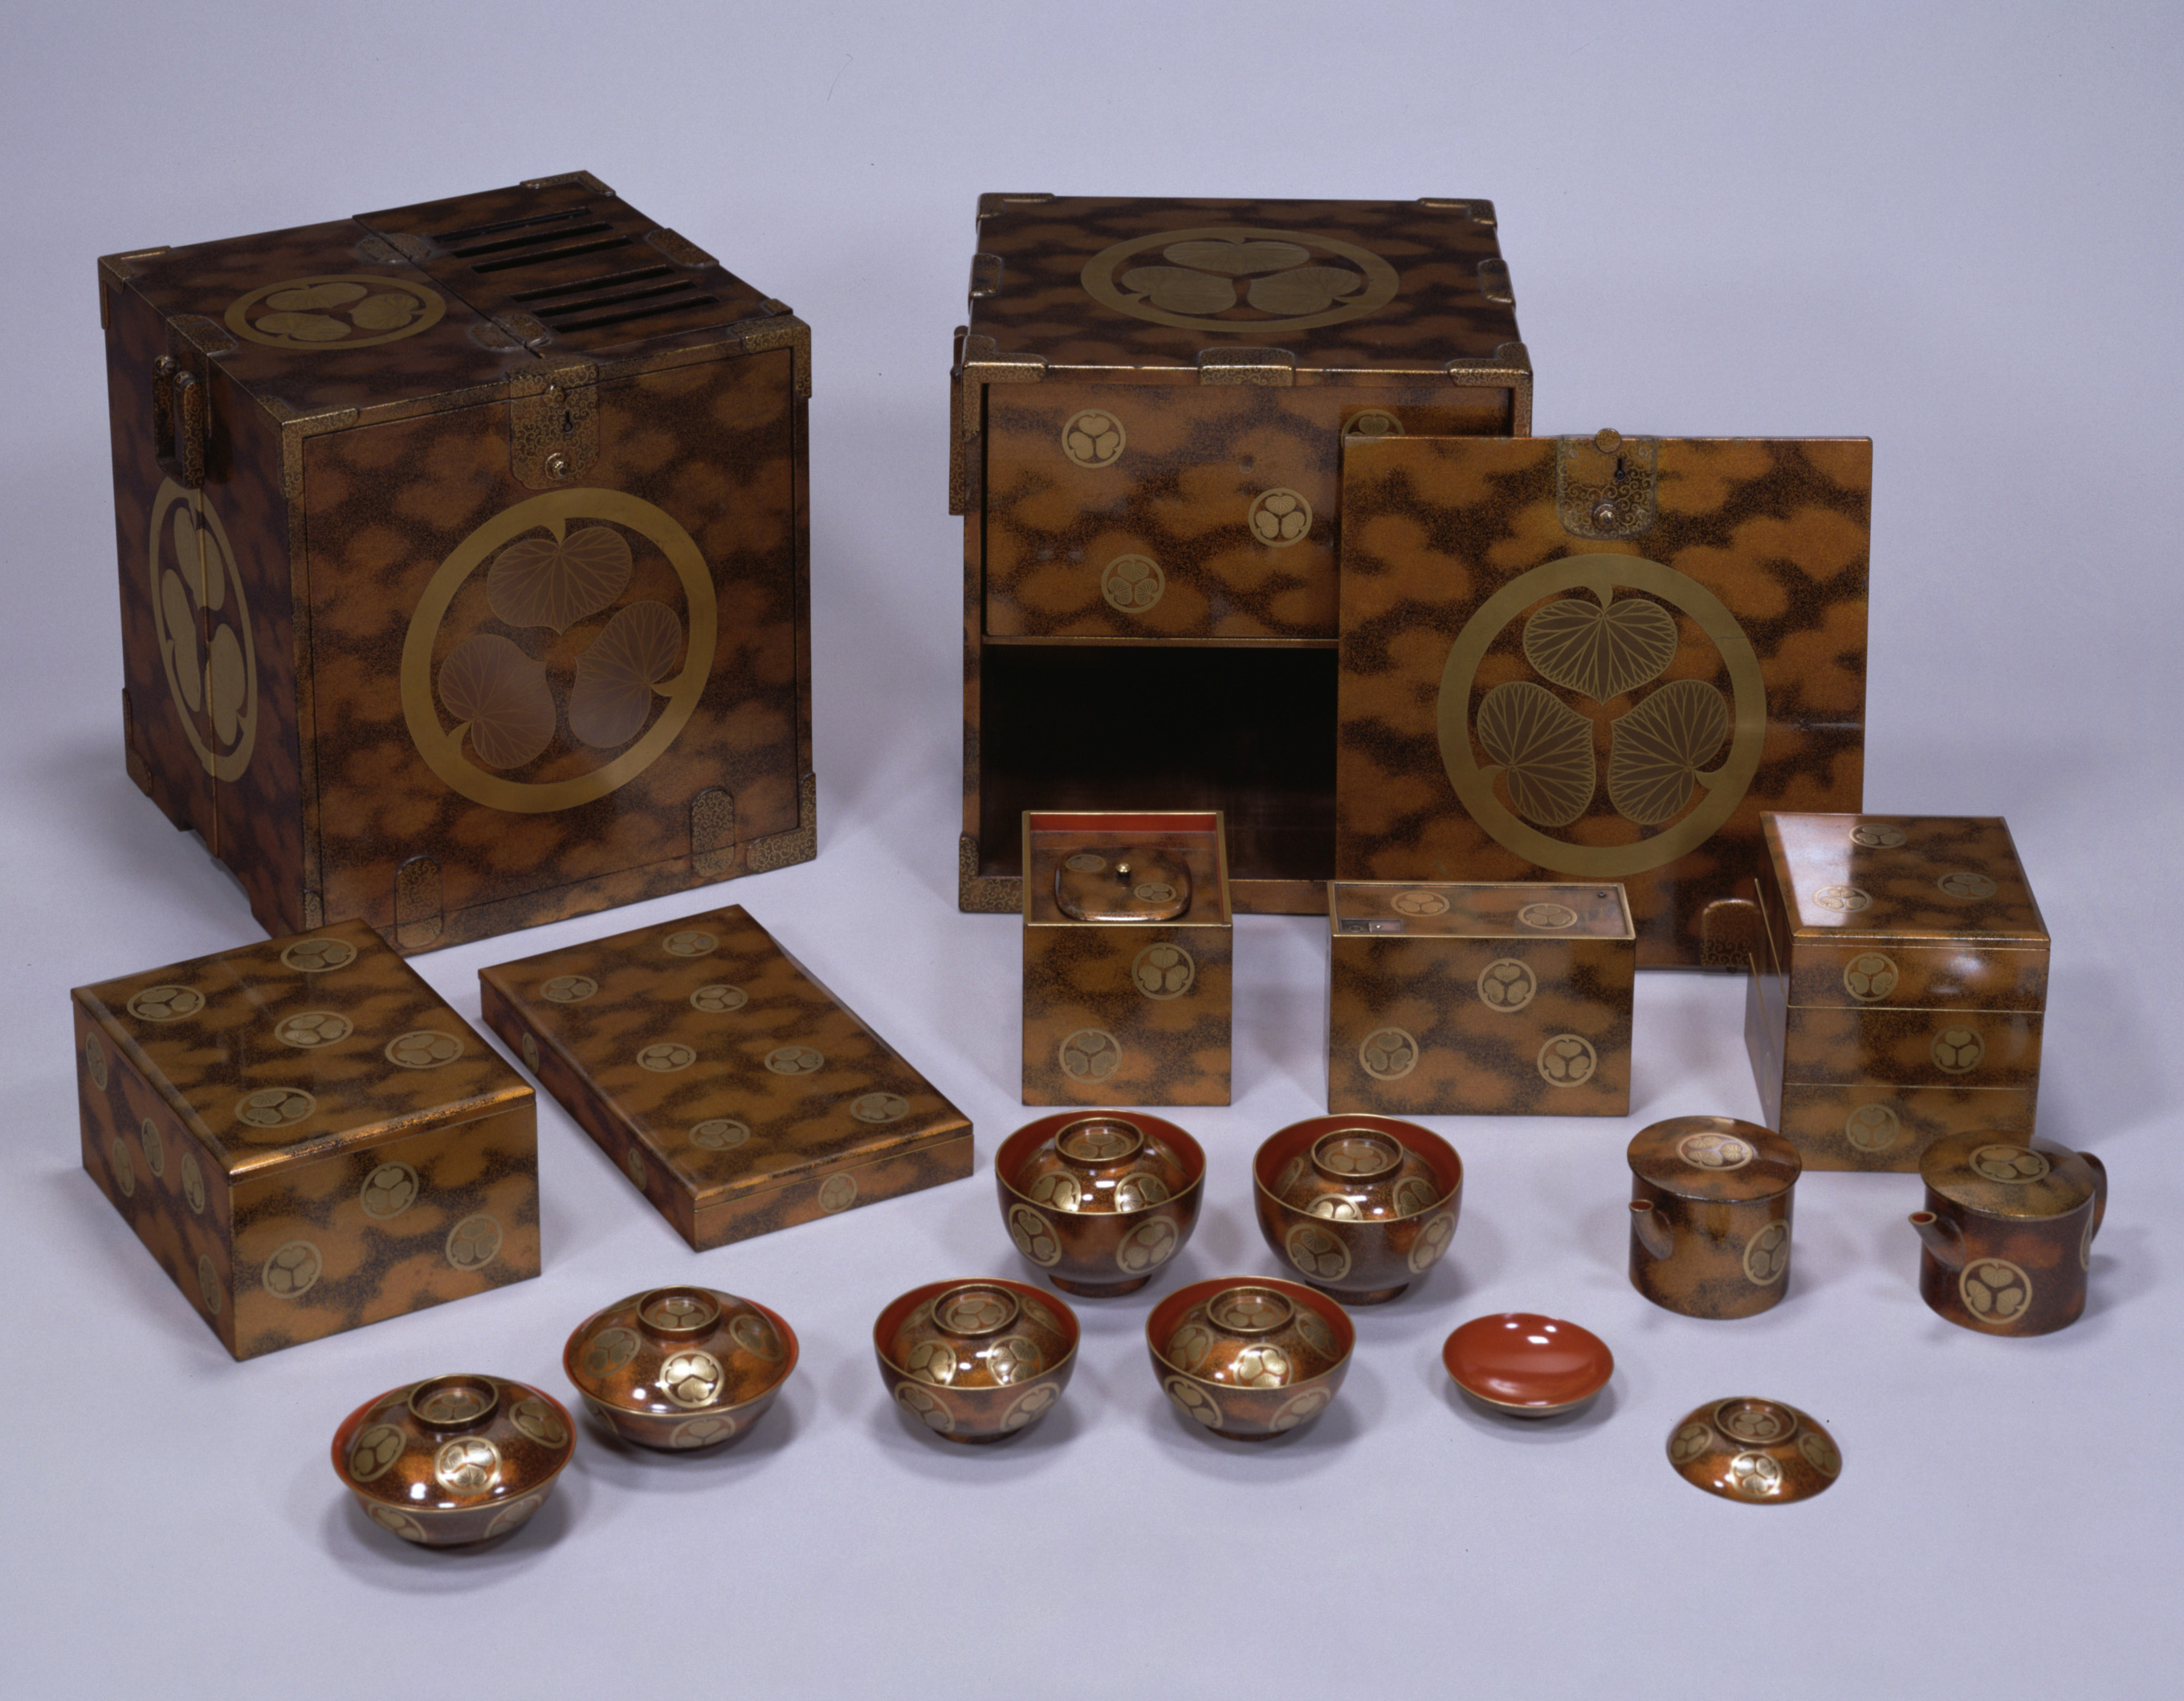 Historical Artifacts - Picnic bento set with tiered food boxes and covered bowls. Japan, Edo period, 19th century u/Munakatasennin